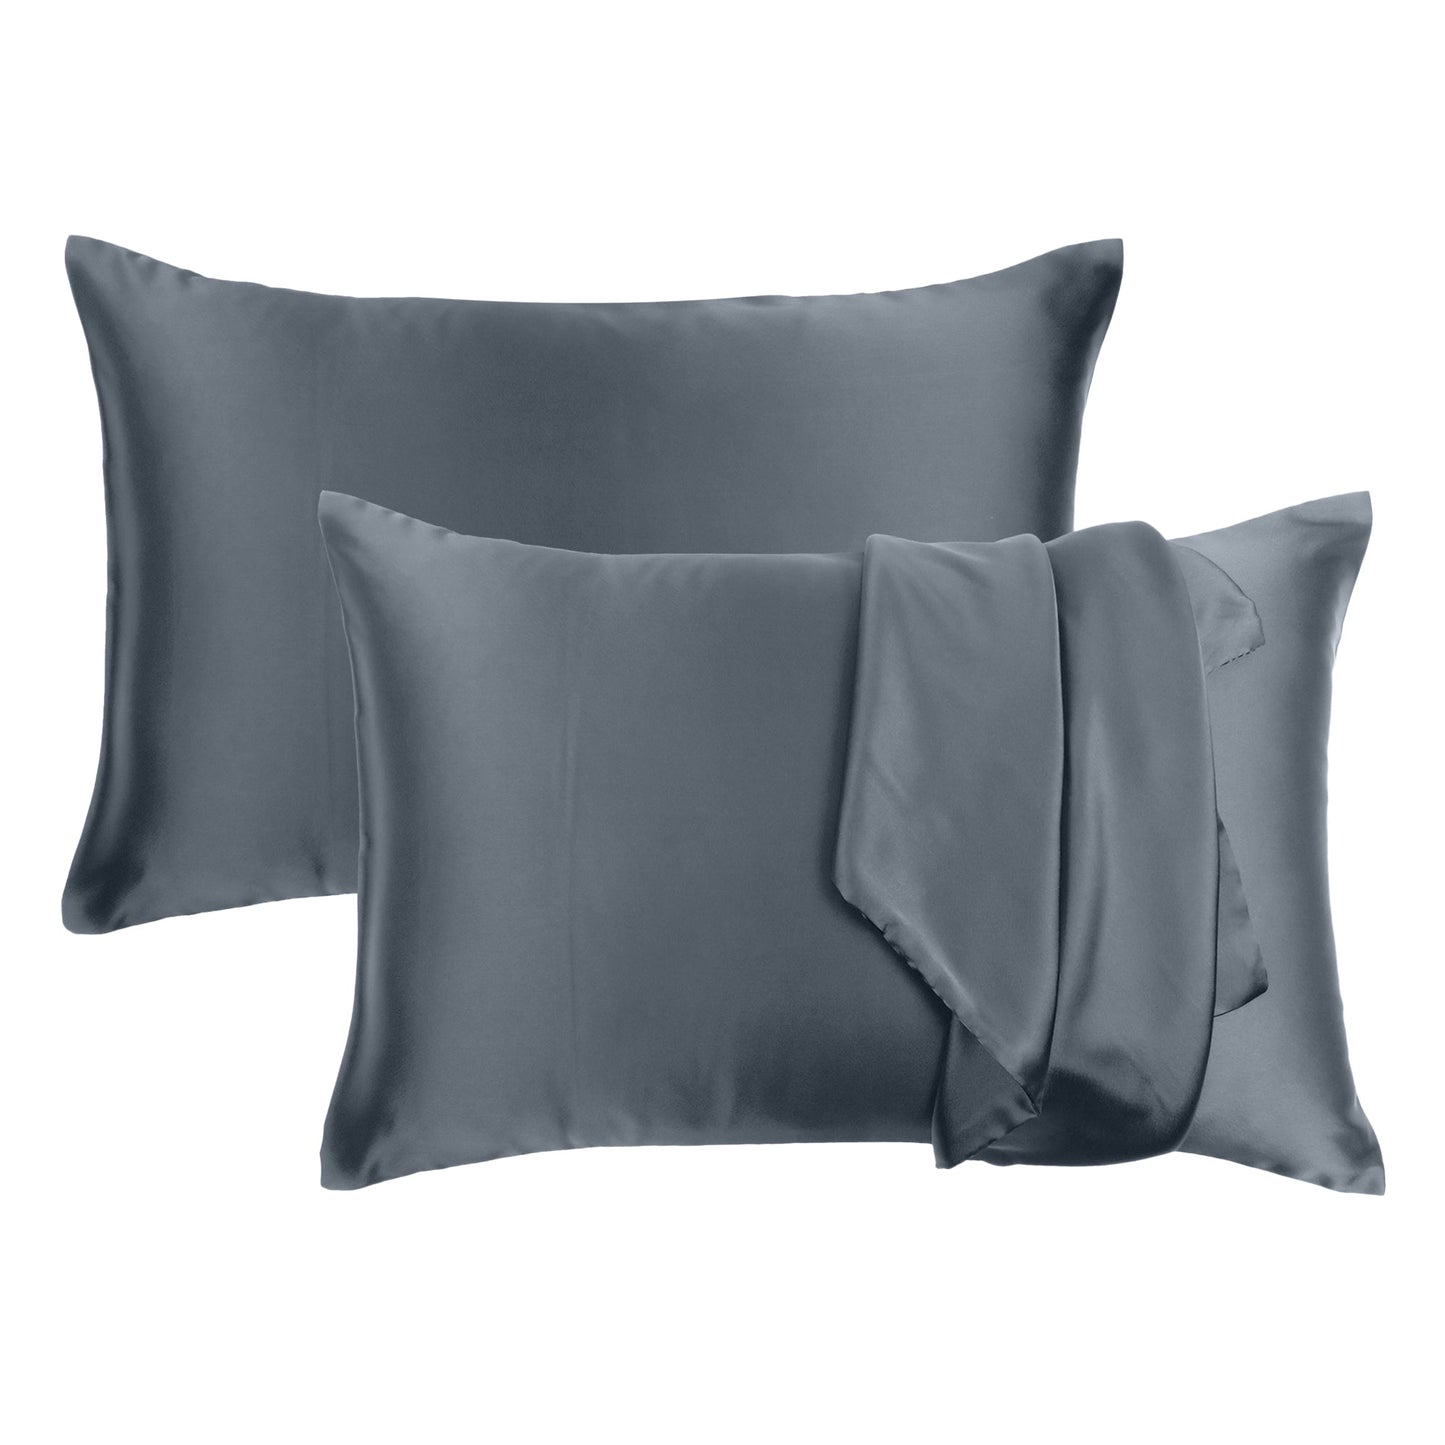 Luxury Soft Plain Satin Silk Pillowcases in Set of 2 - Castlerock Gray